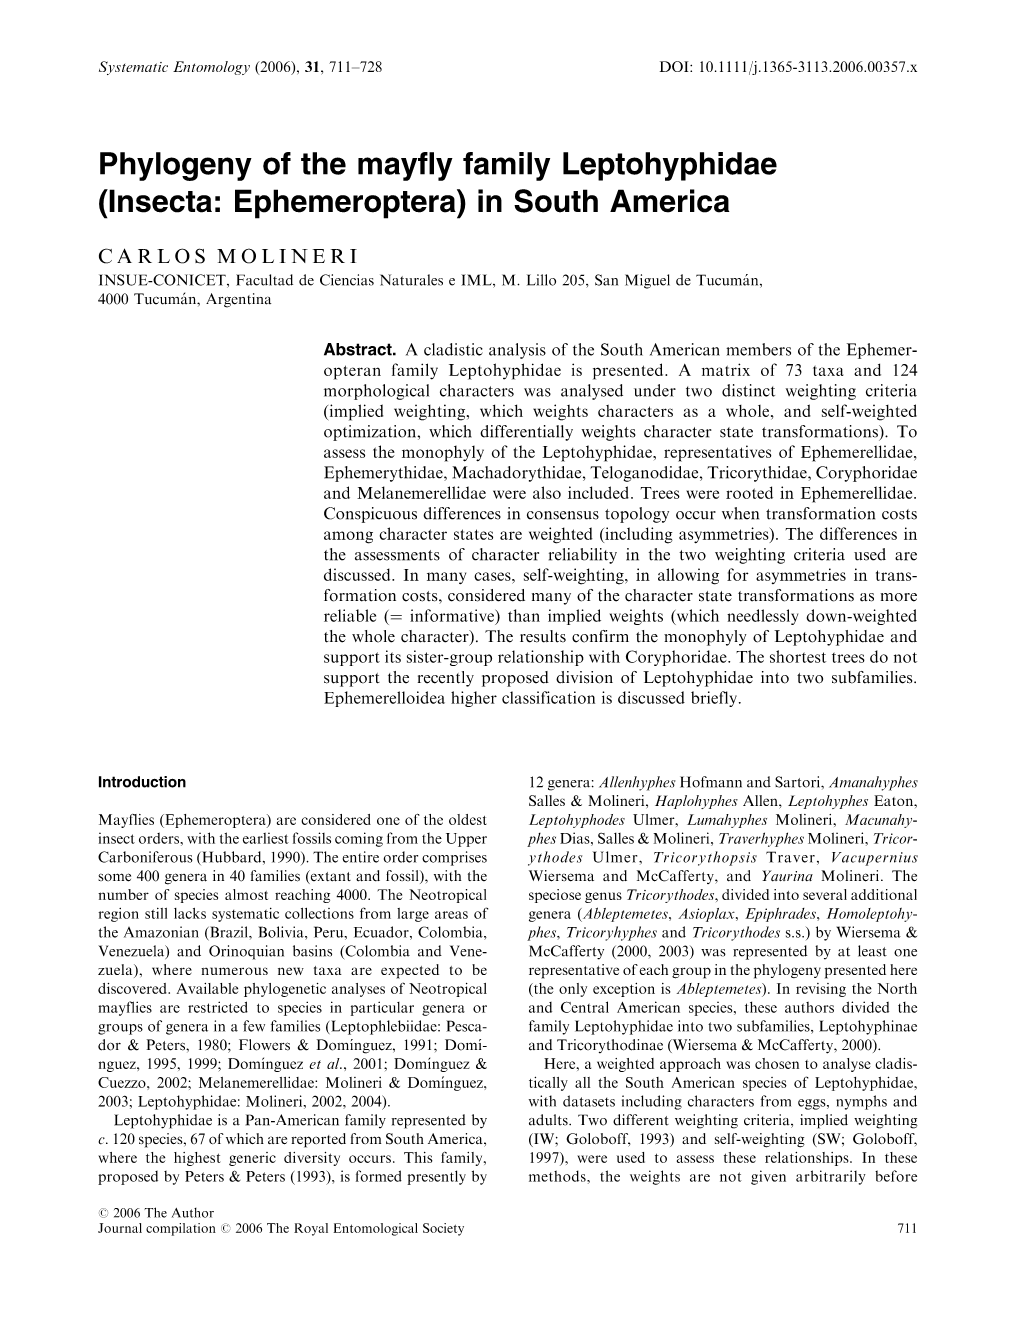 Phylogeny of the Mayfly Family Leptohyphidae (Insecta: Ephemeroptera) in South America